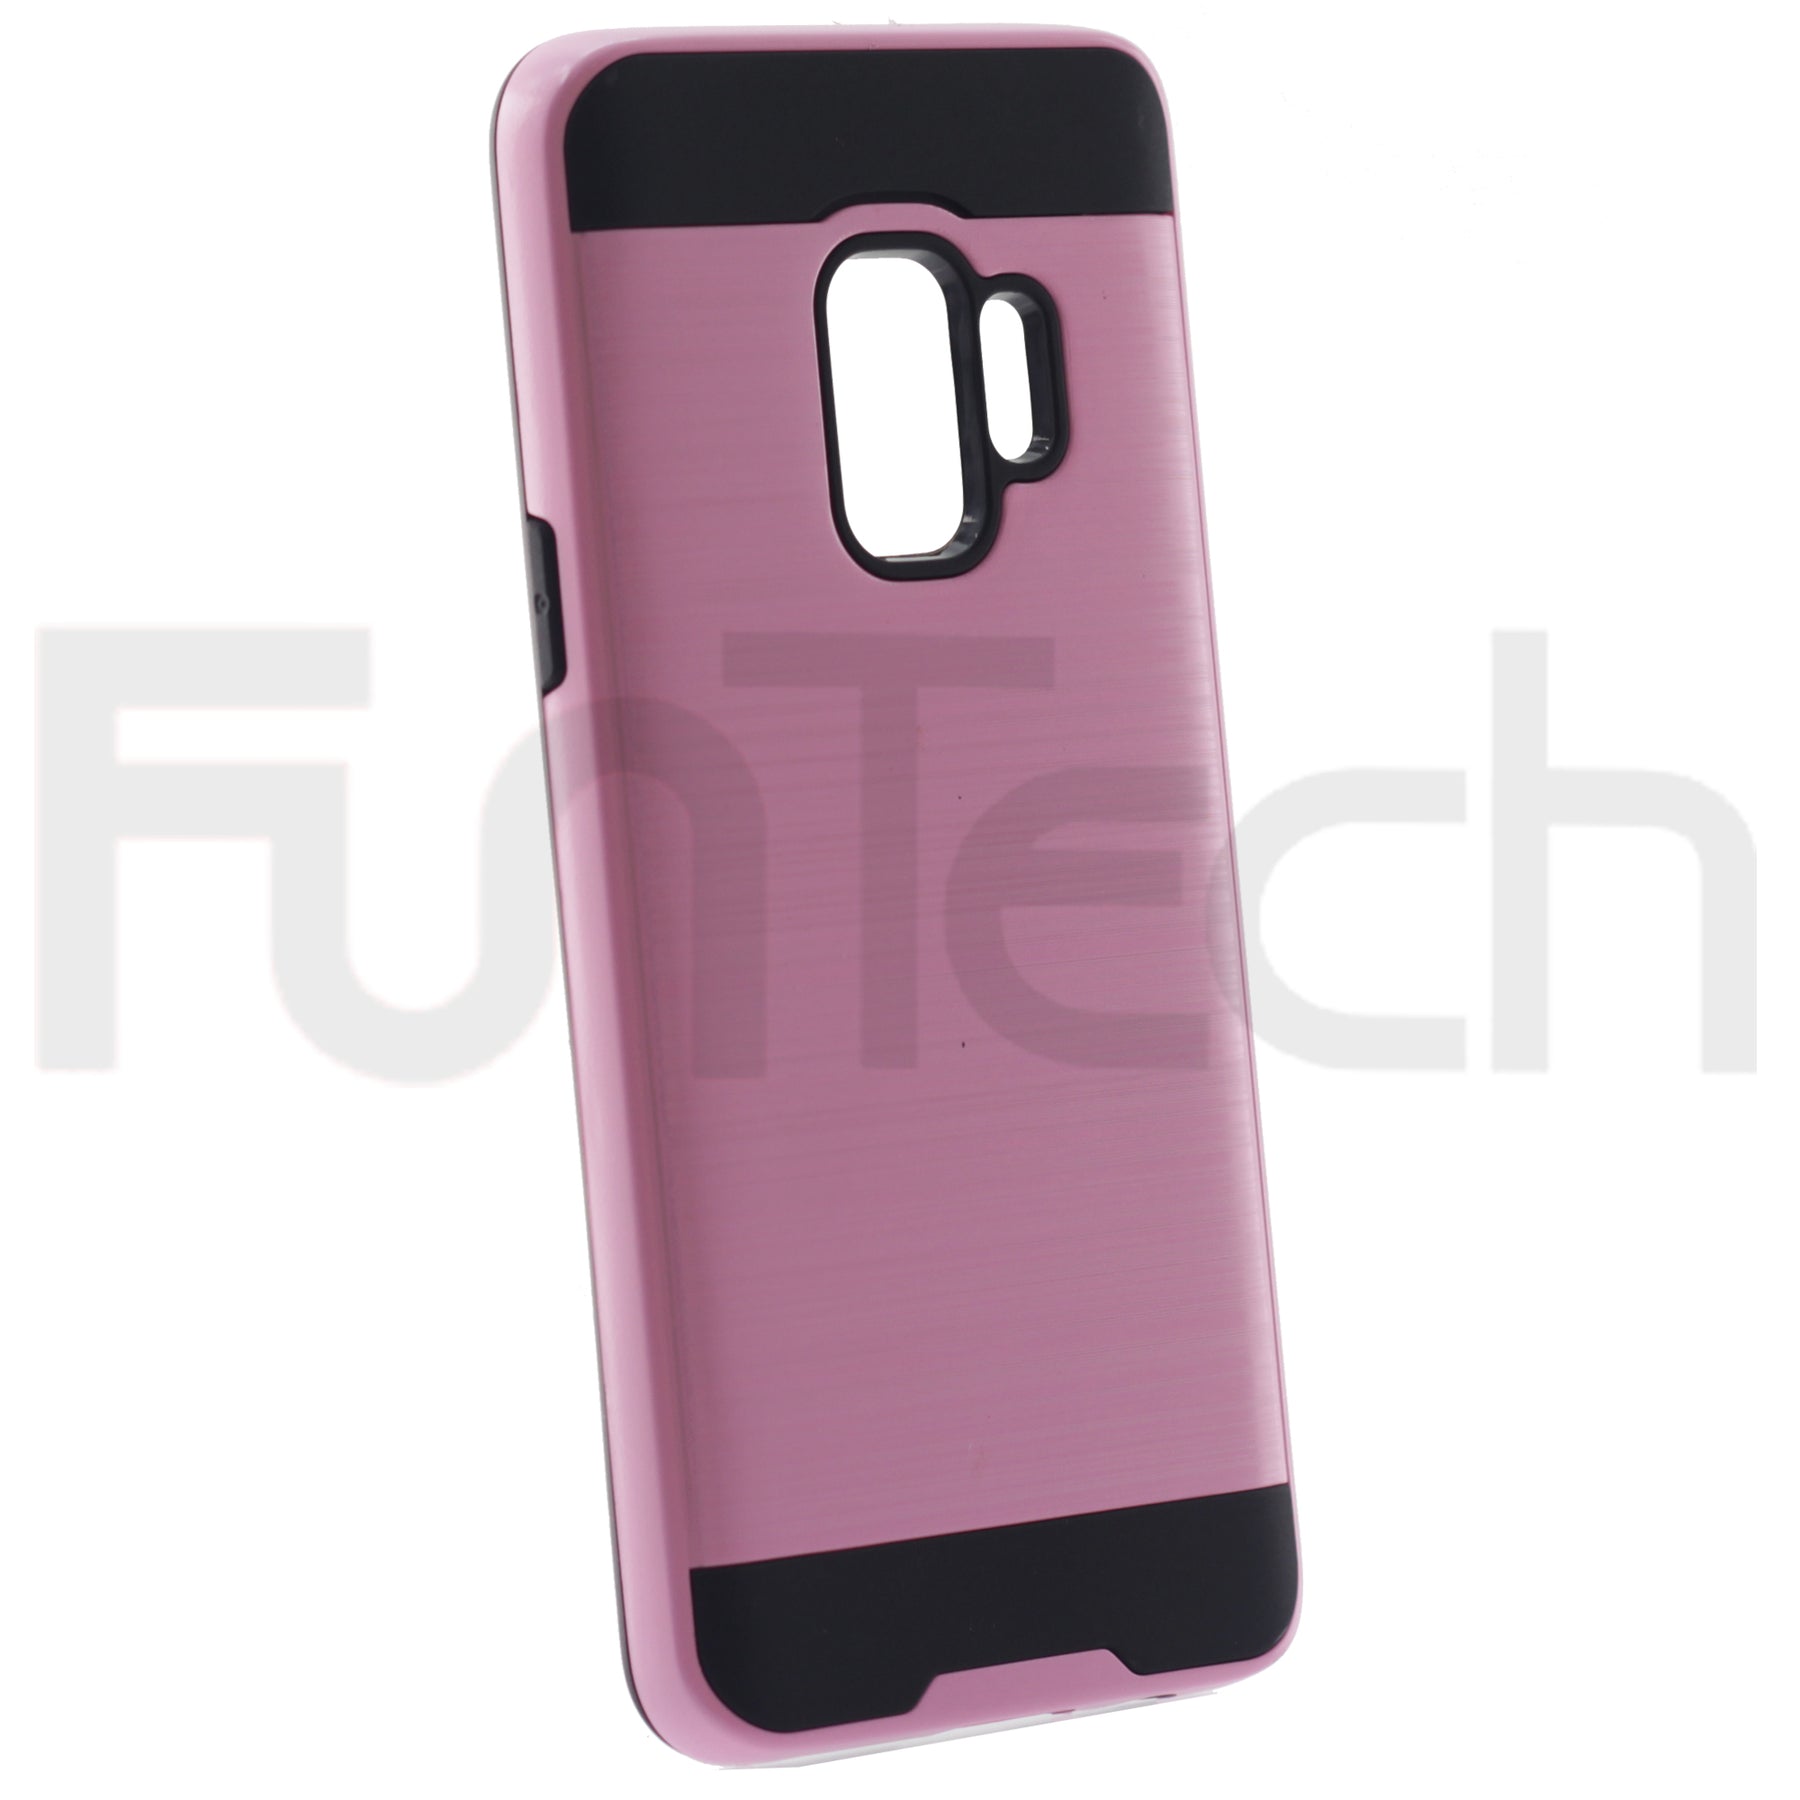 SamsungS9, Slim Armor Back Case, Color Pink